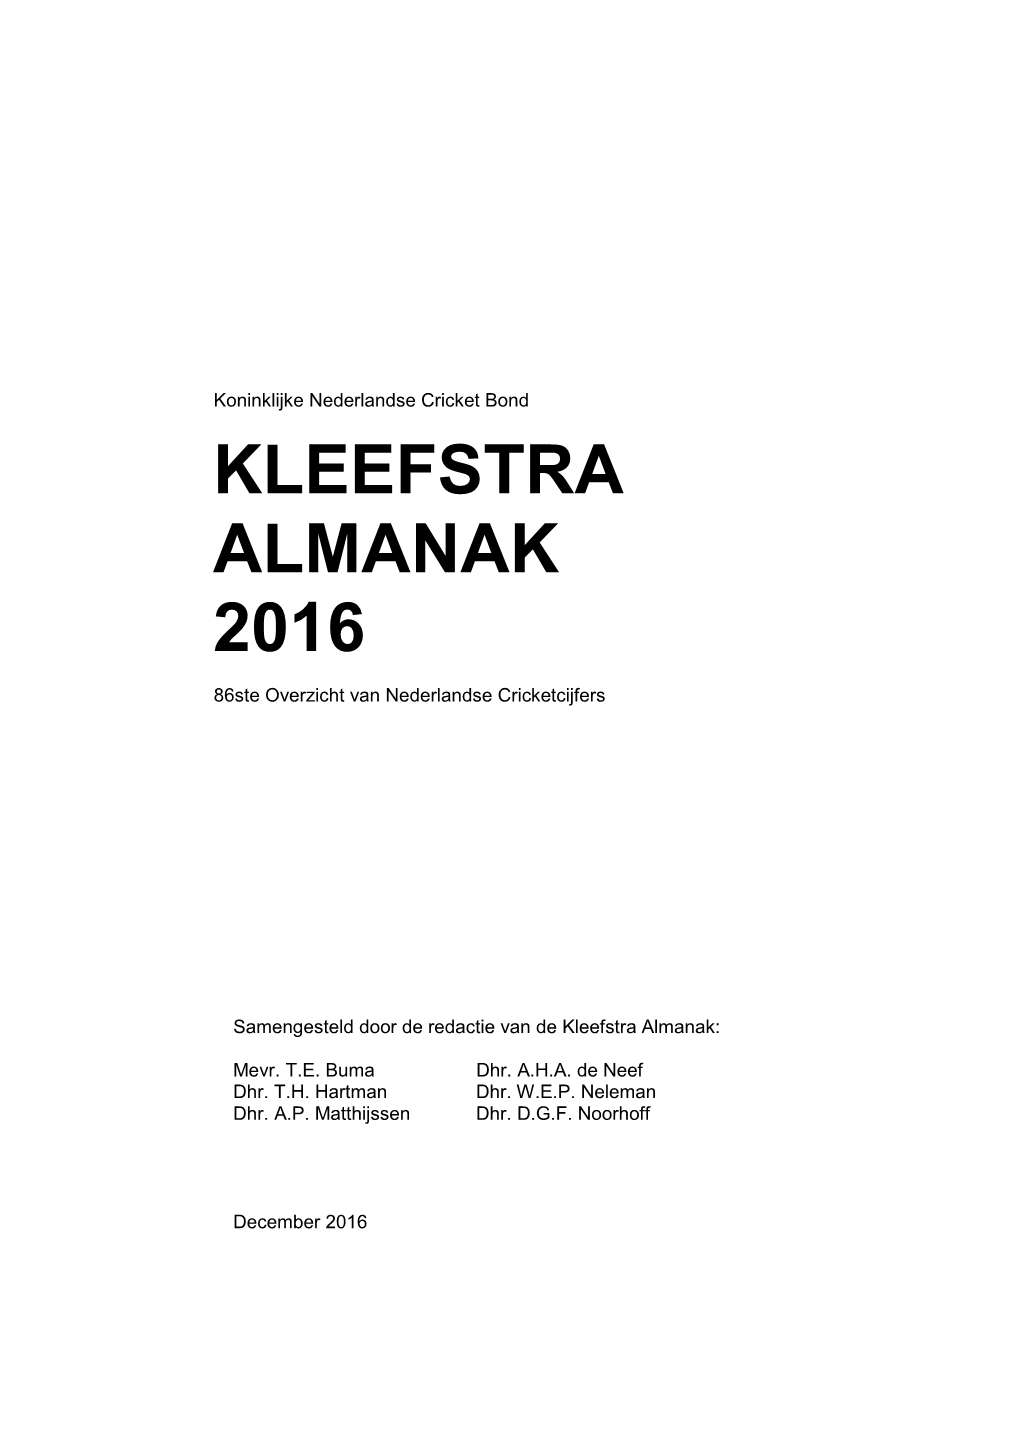 Kleefstra Almanak 2016